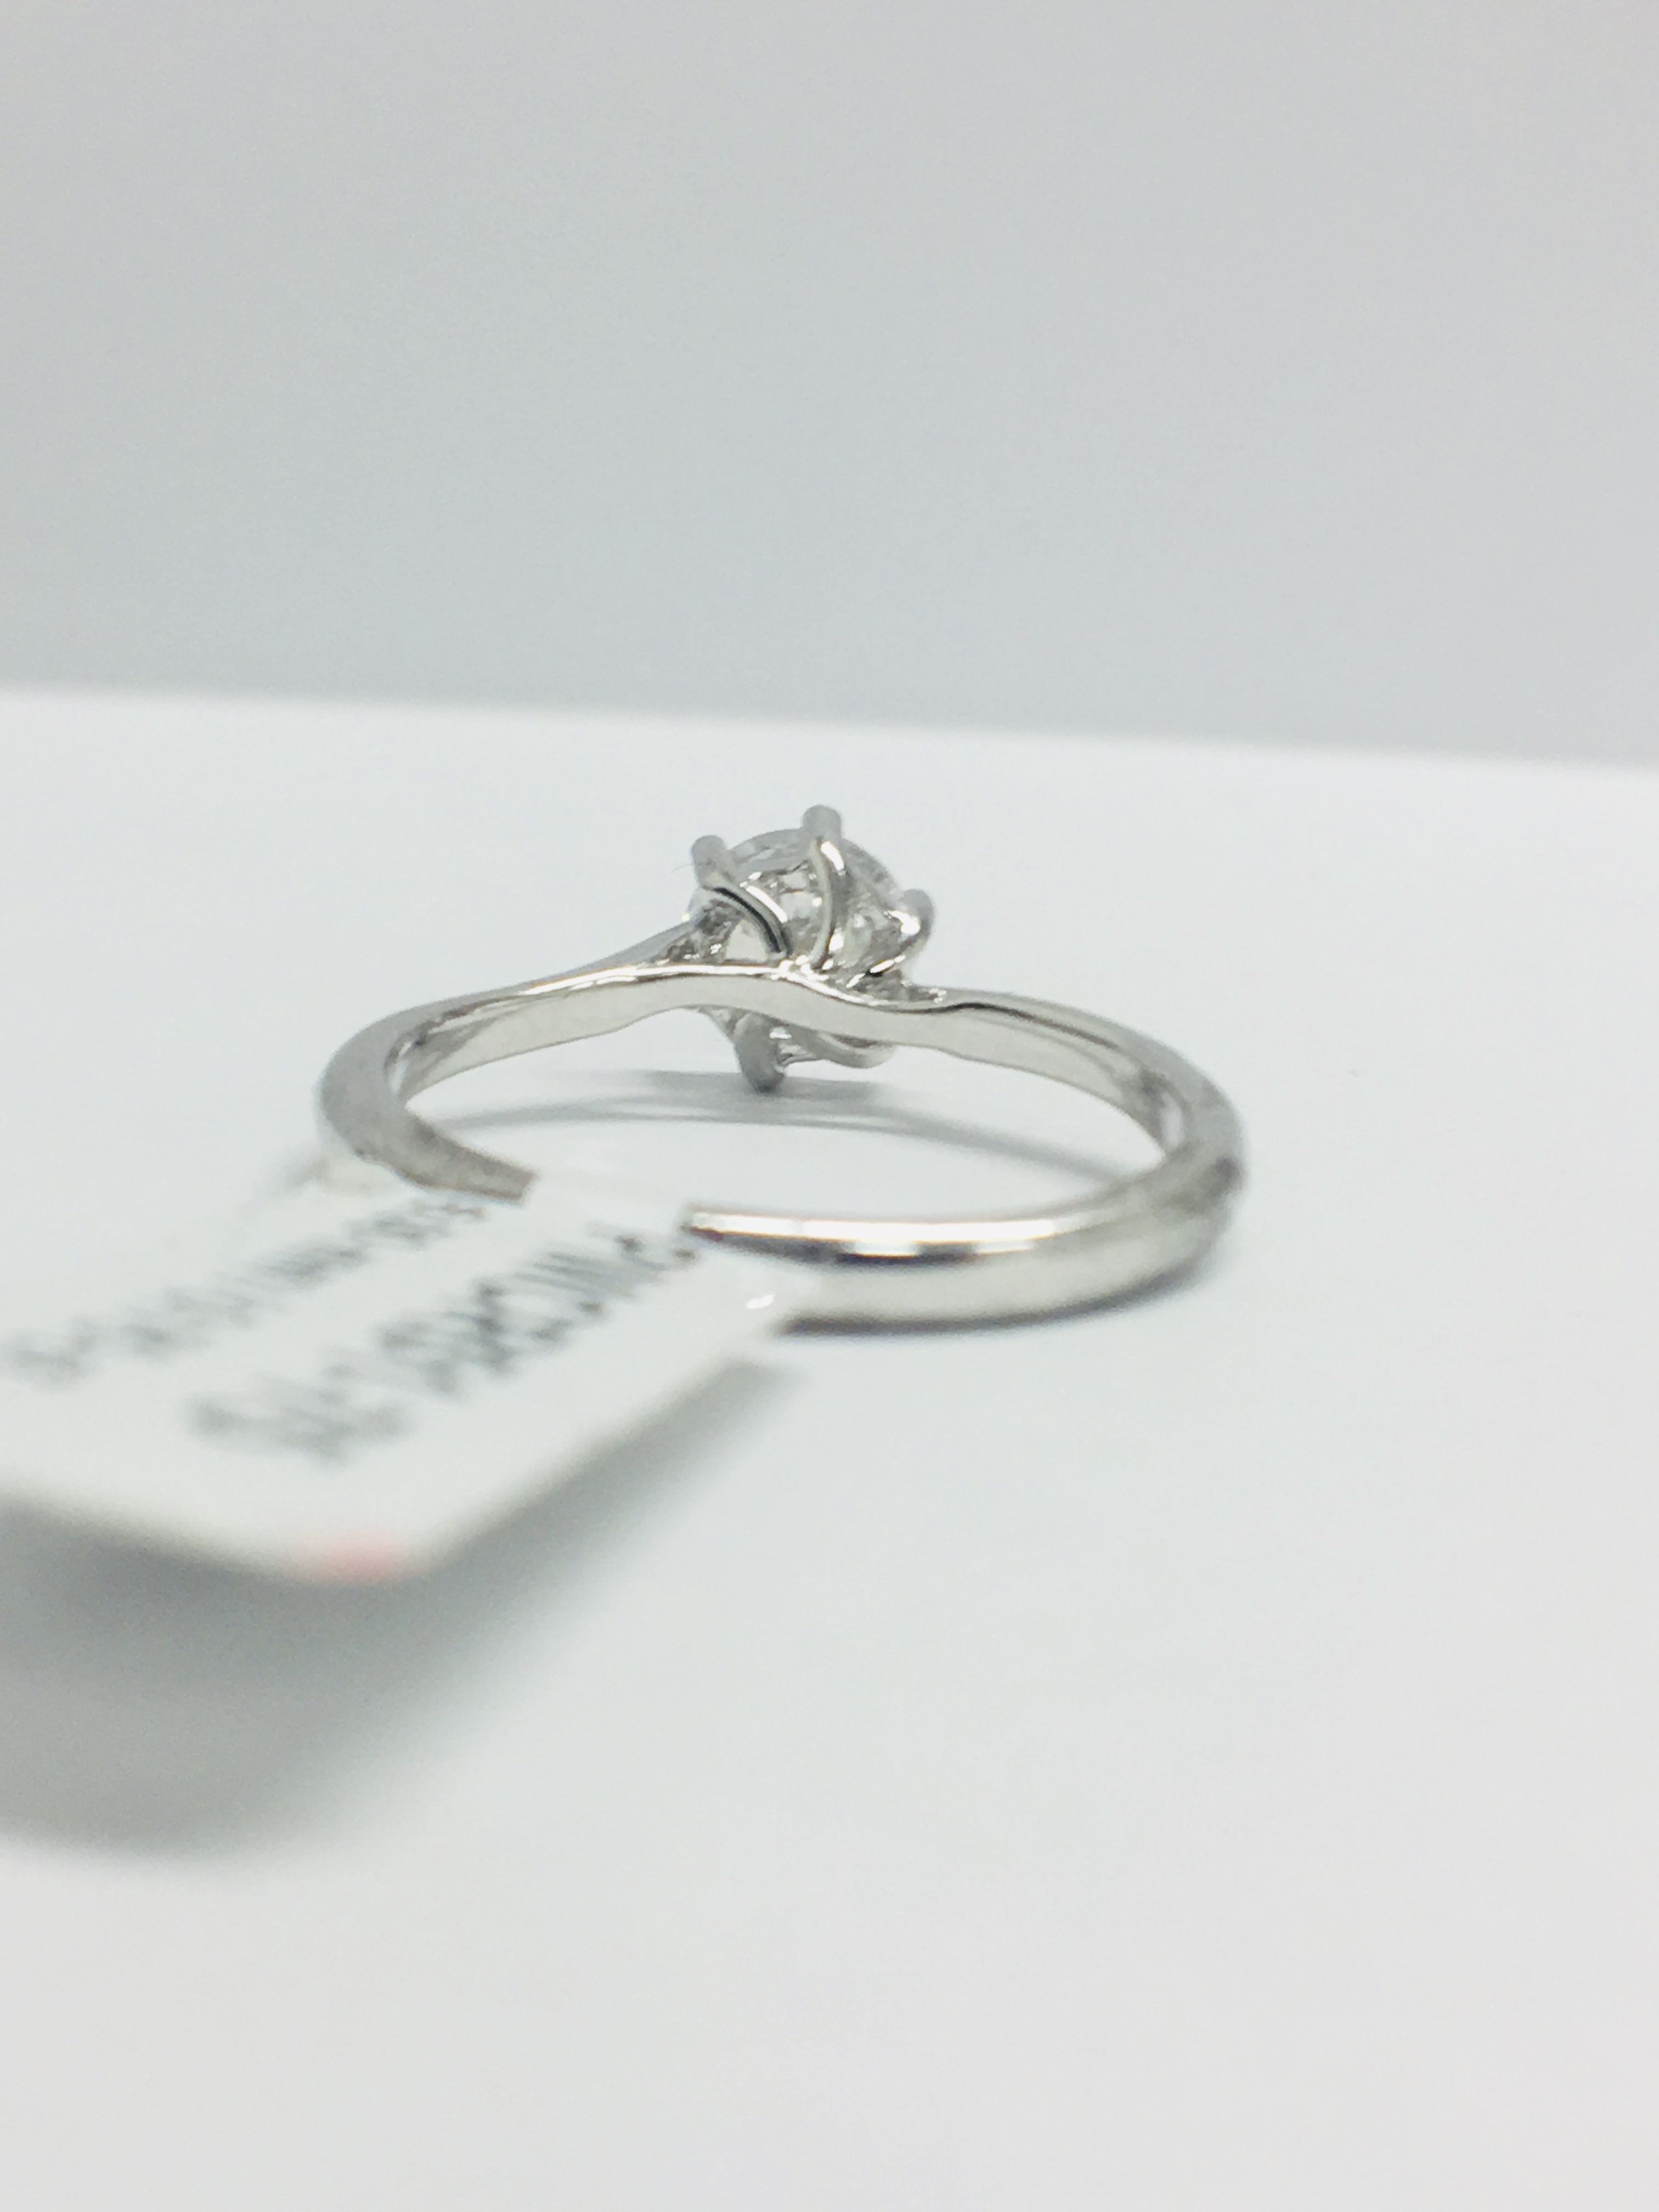 Platinum Solitaire 4 Claw Diamond Ring, - Image 5 of 8